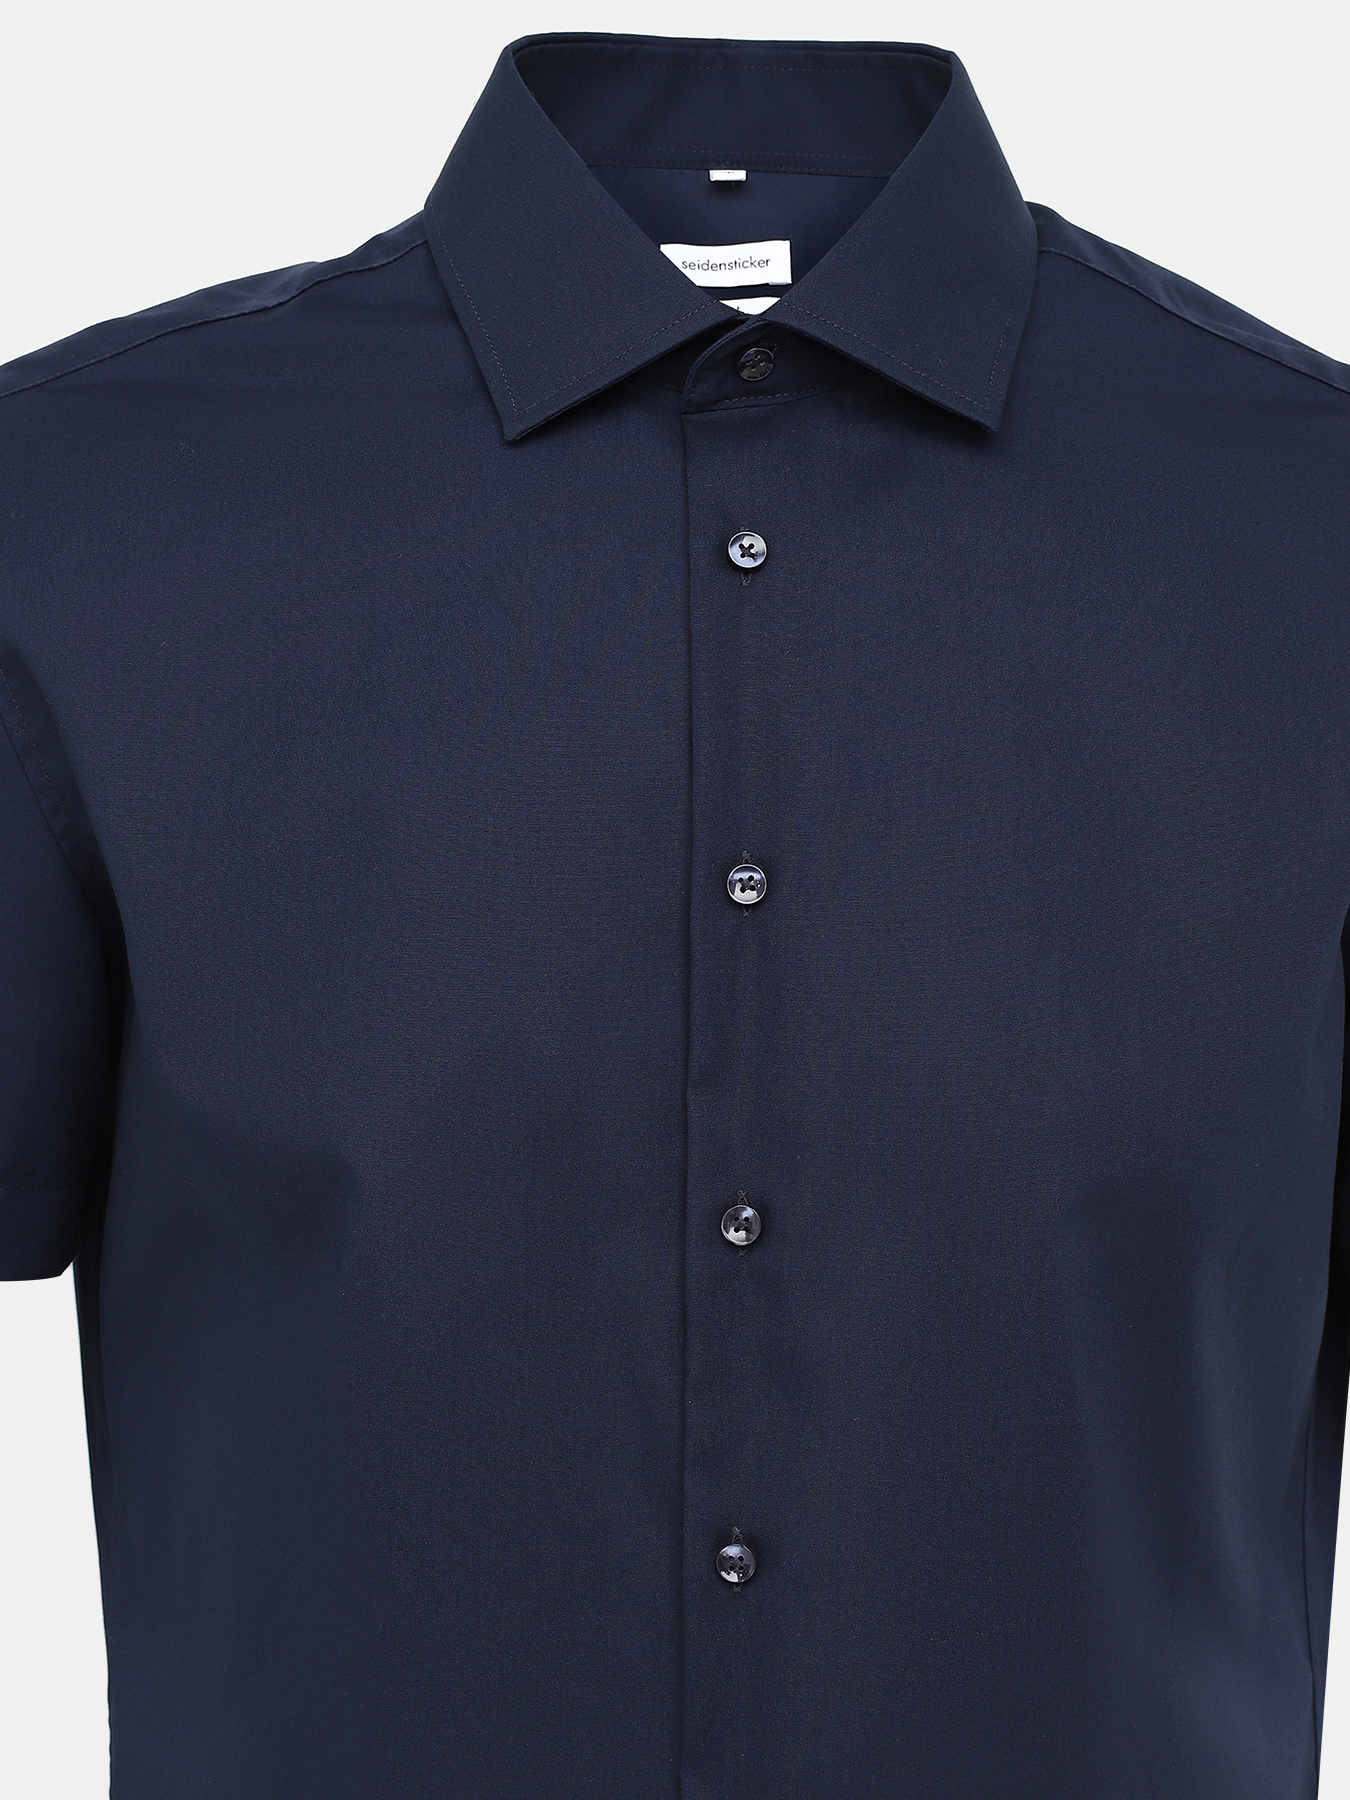 Рубашка Seidensticker 408005-023, цвет темно-синий, размер 58 - фото 3